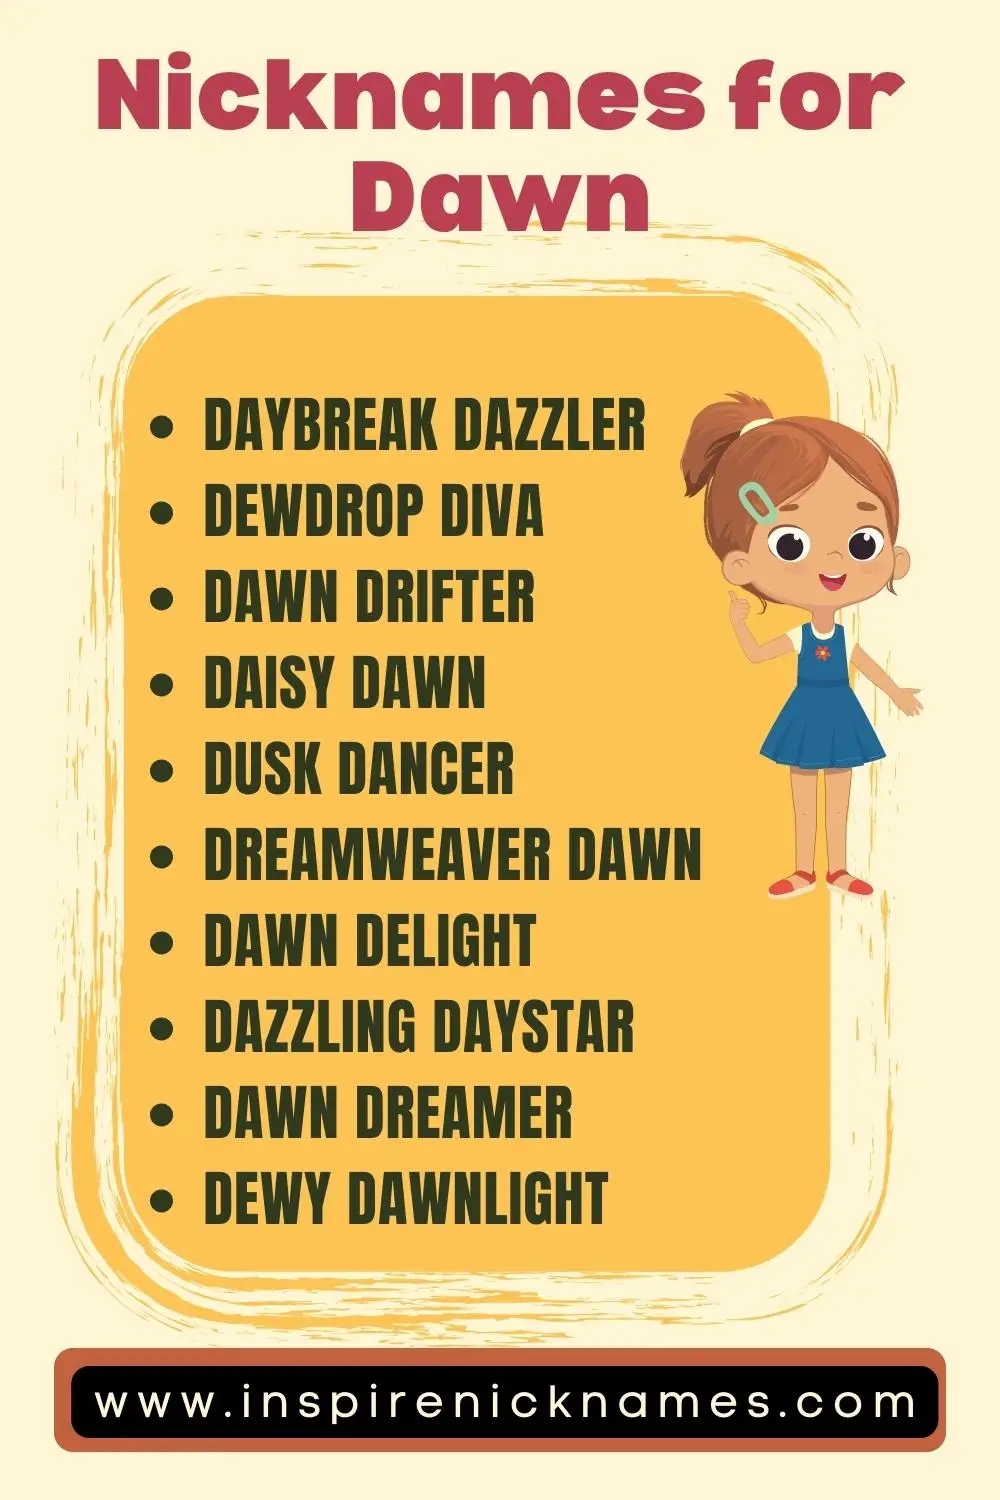 Nicknames for Dawn ideas list